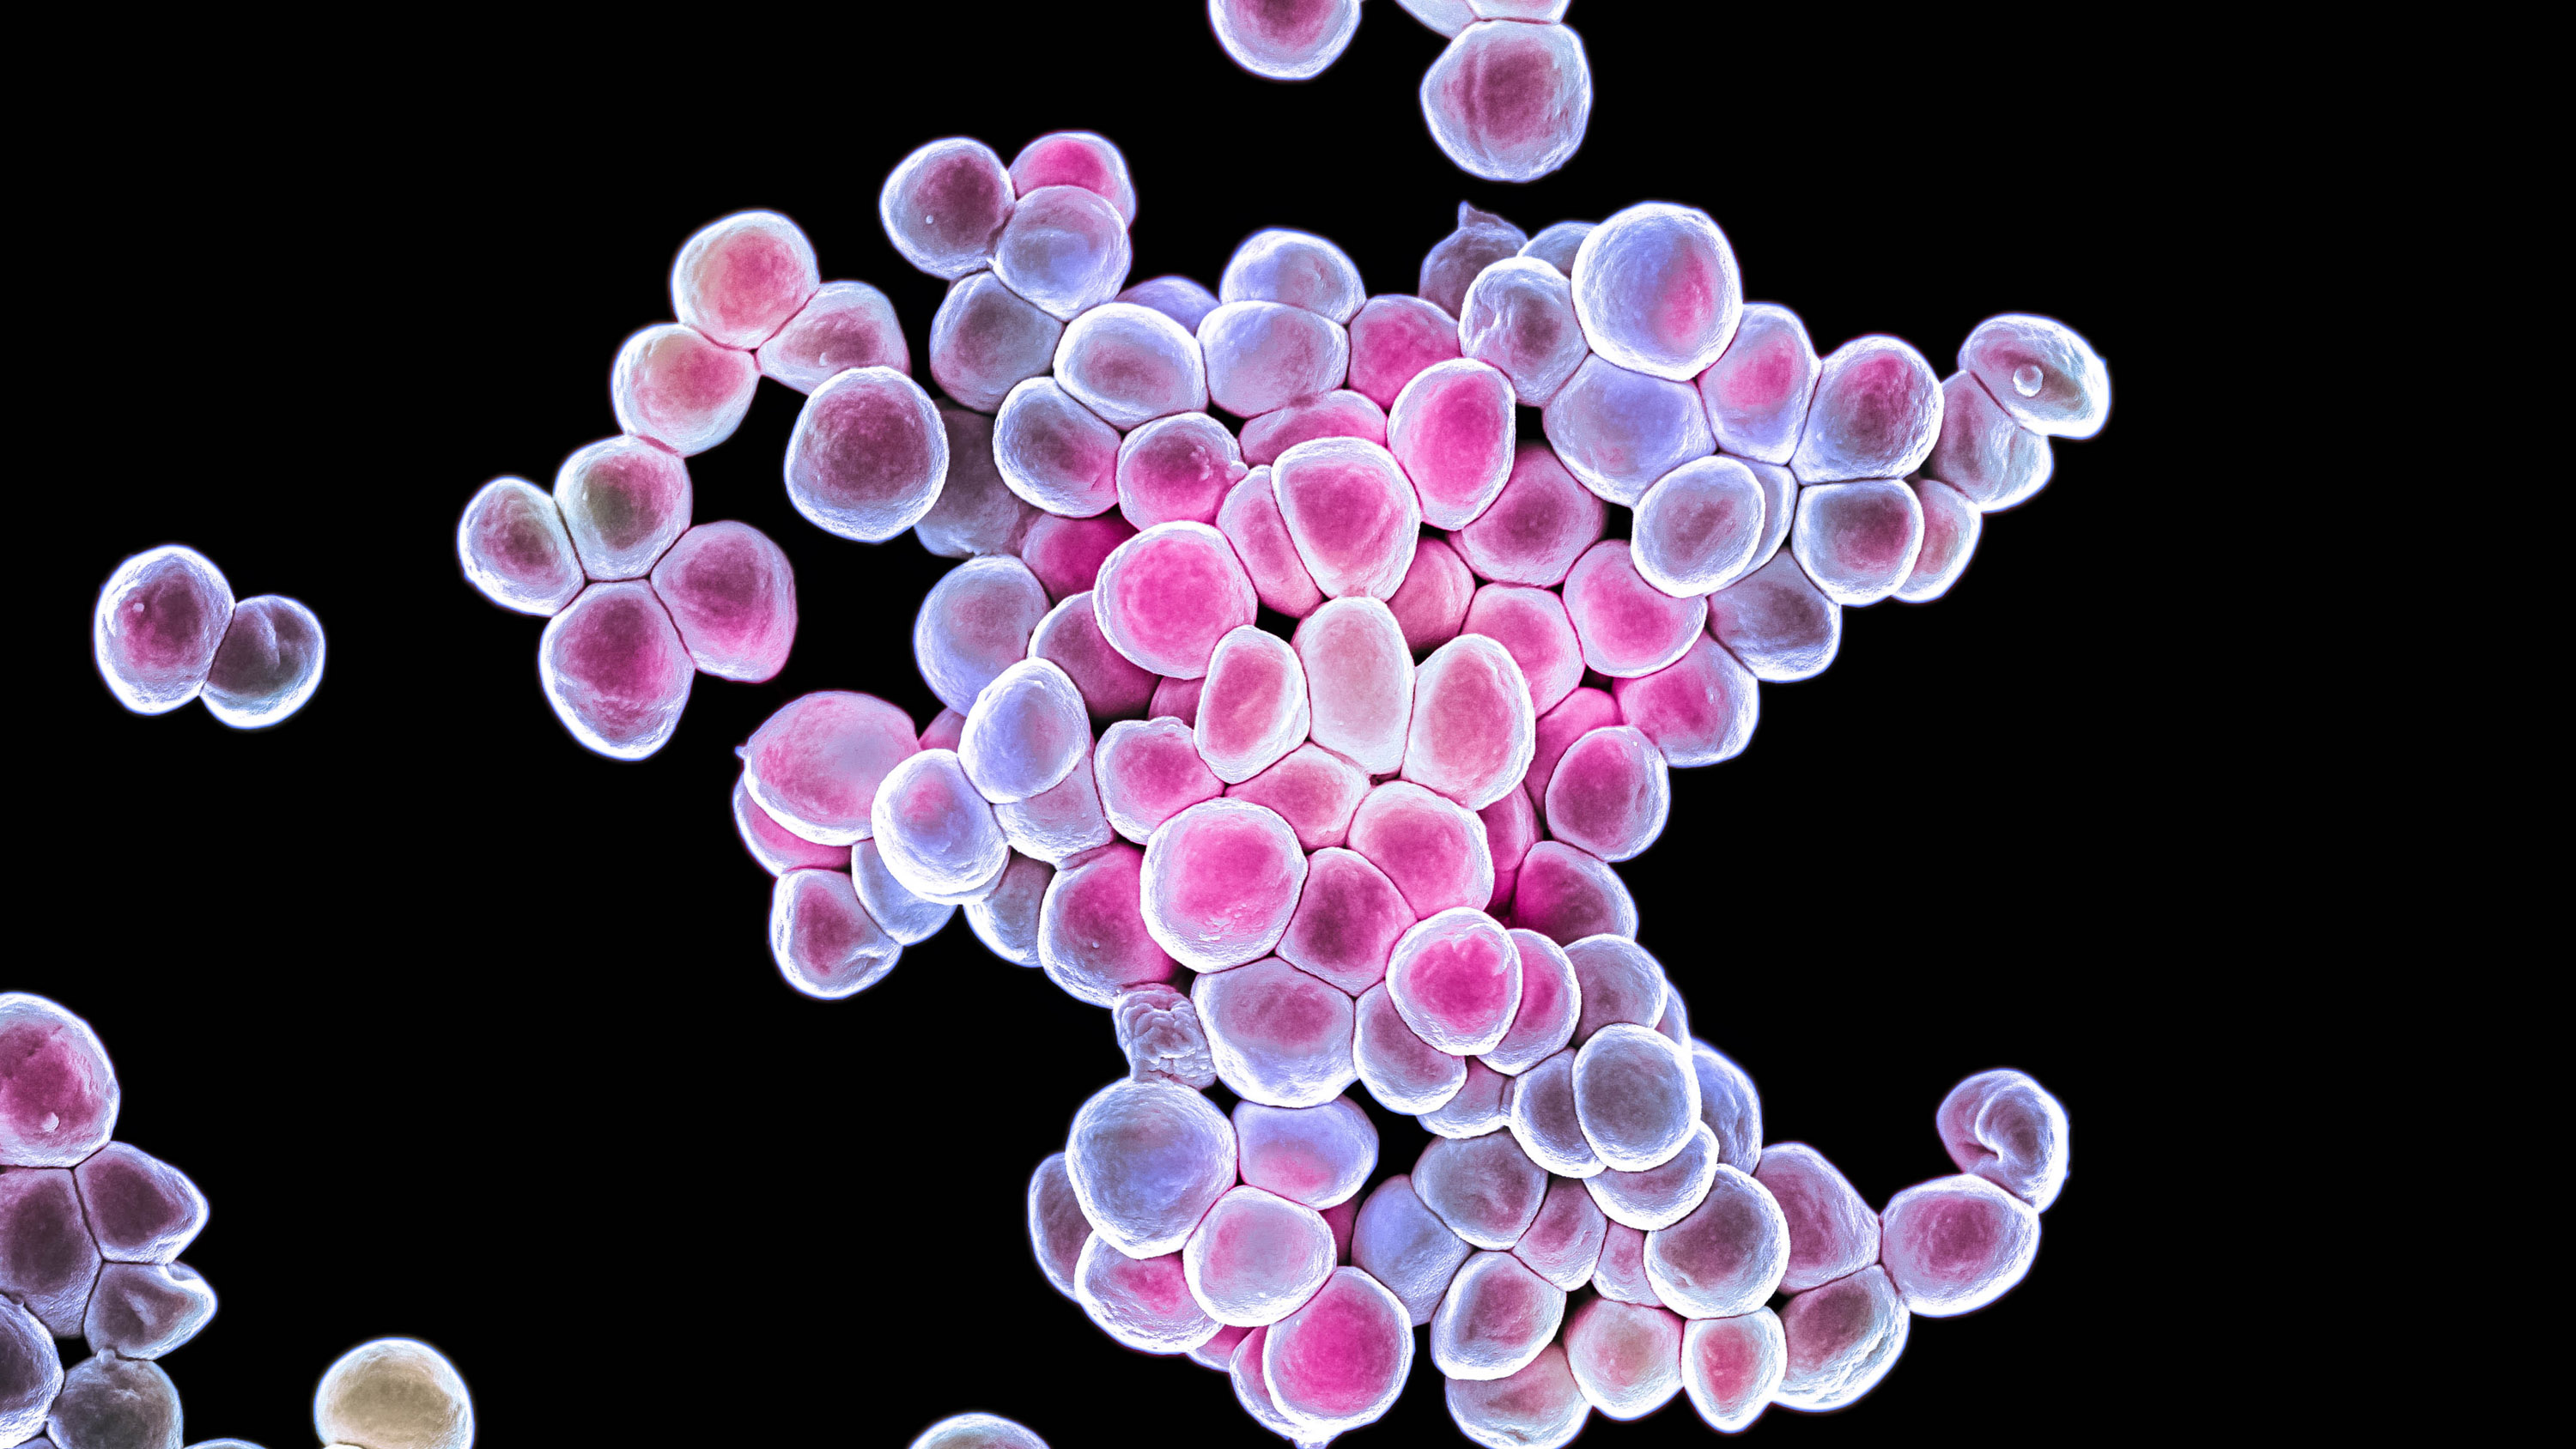 Colour enhanced scanning electron micrograph (SEM) of Staphylococcus epidermidis diplococci